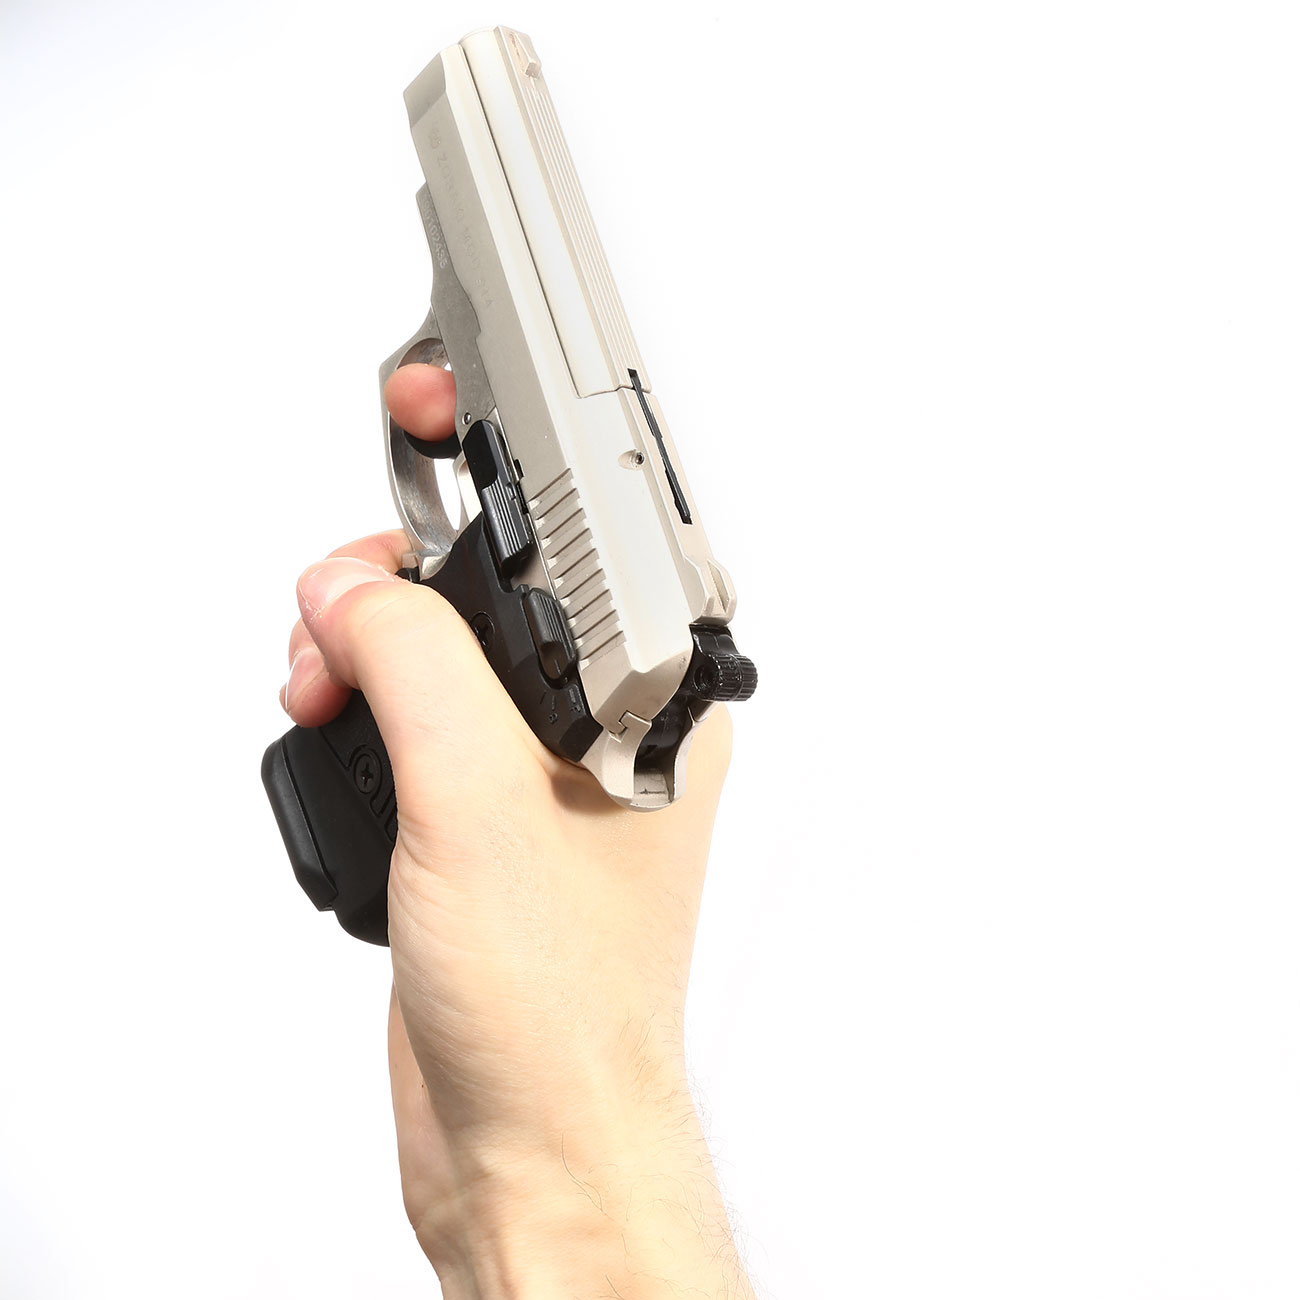 Zoraki 914 satina Schreckschuss Pistole 9mm P.A.K Bild 5